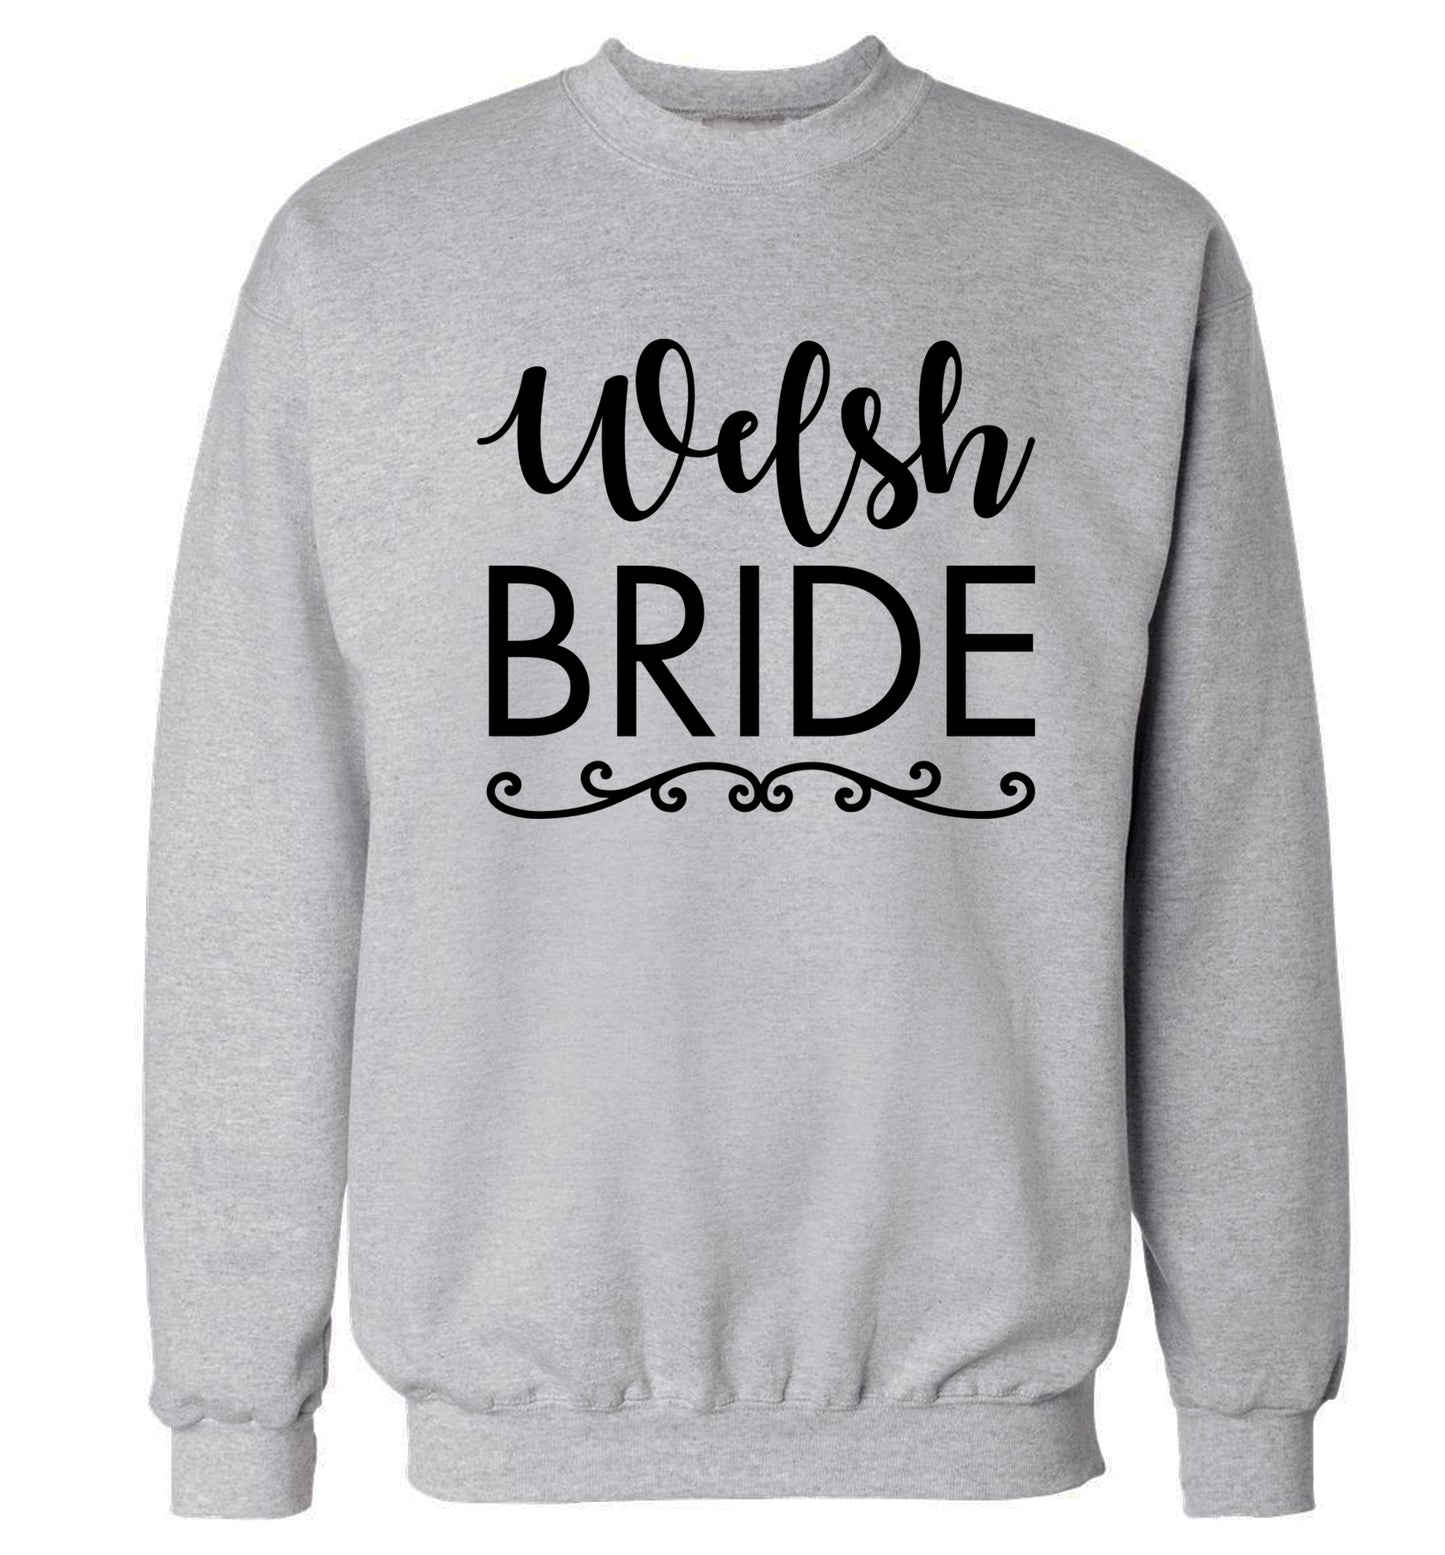 Welsh Bride Adult's unisex grey Sweater 2XL